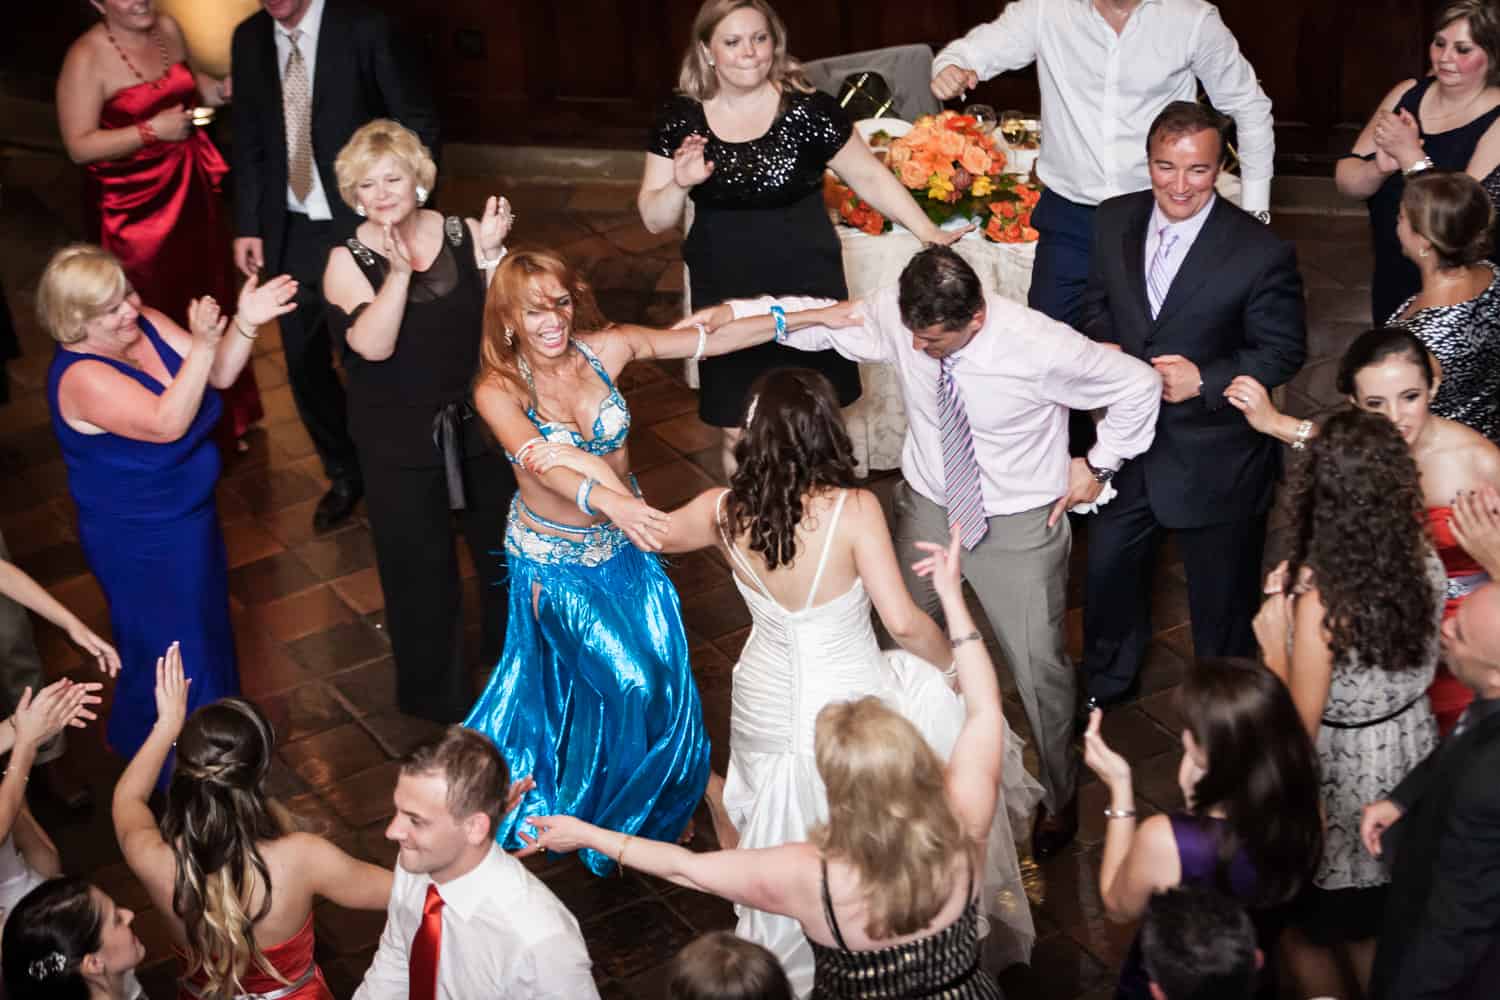 Guests dancing at a Harvard Club wedding